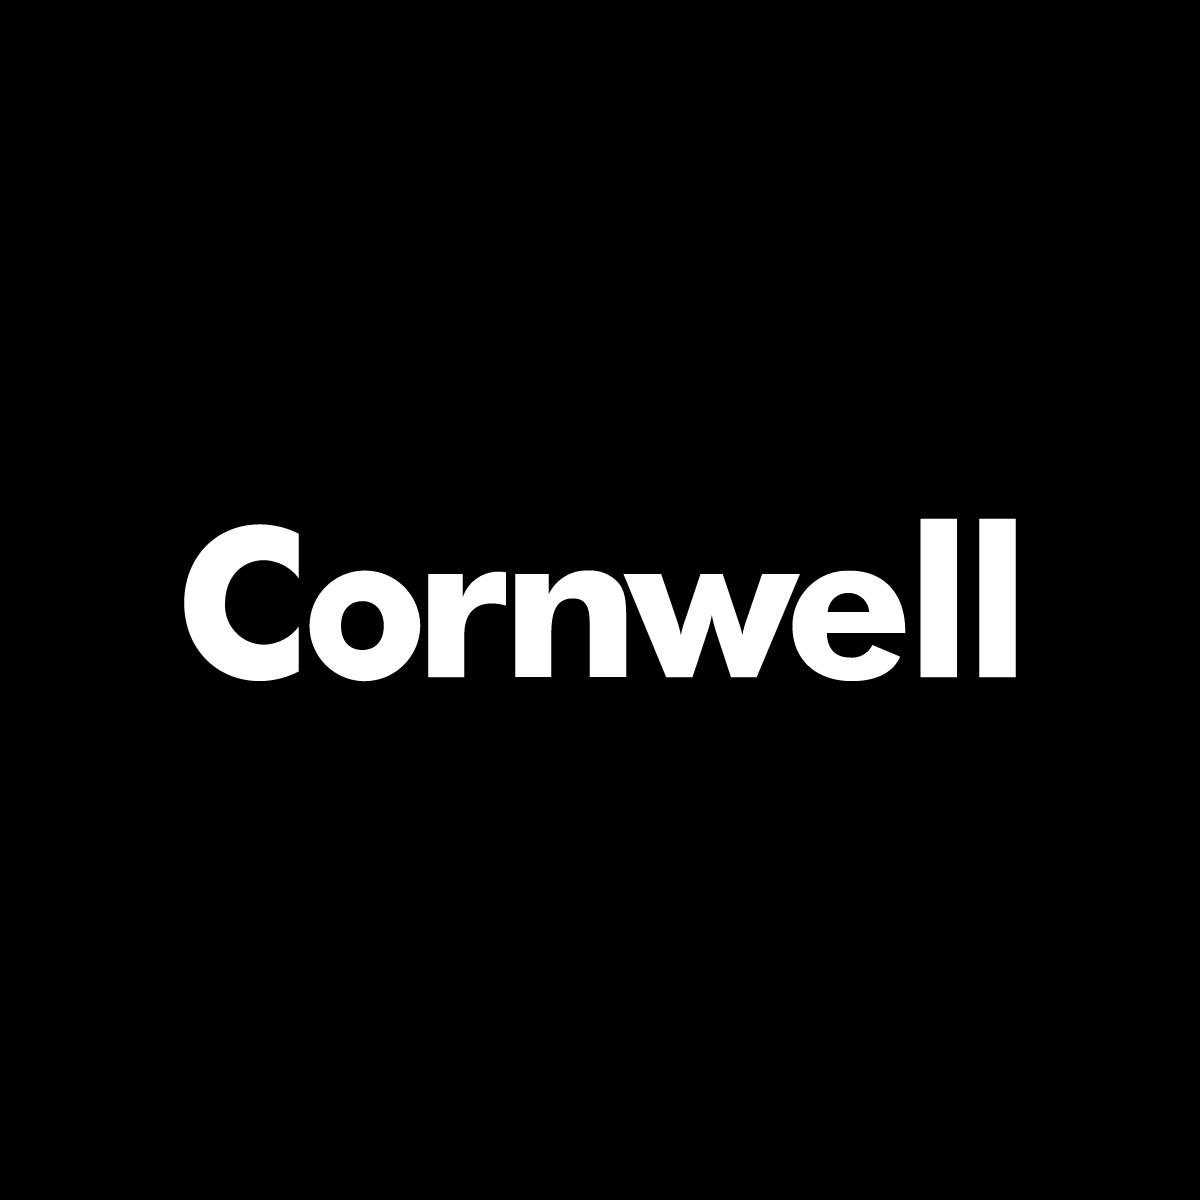 Cornwell Logo - About Brand Design